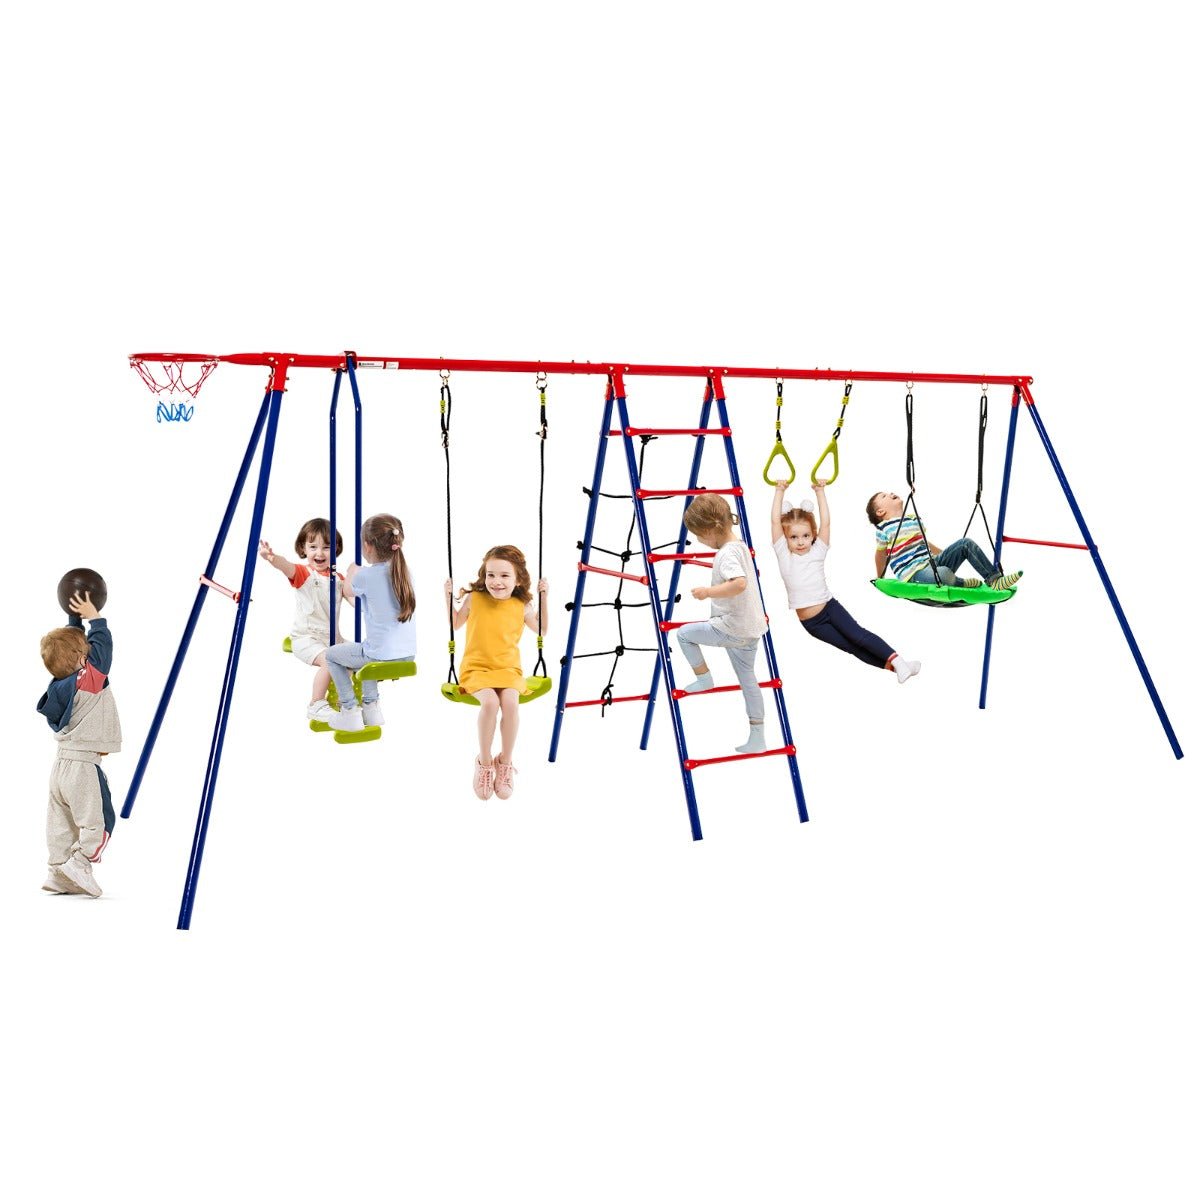 Climbing Ladder Swing Set: Active Outdoor Fun for Kids